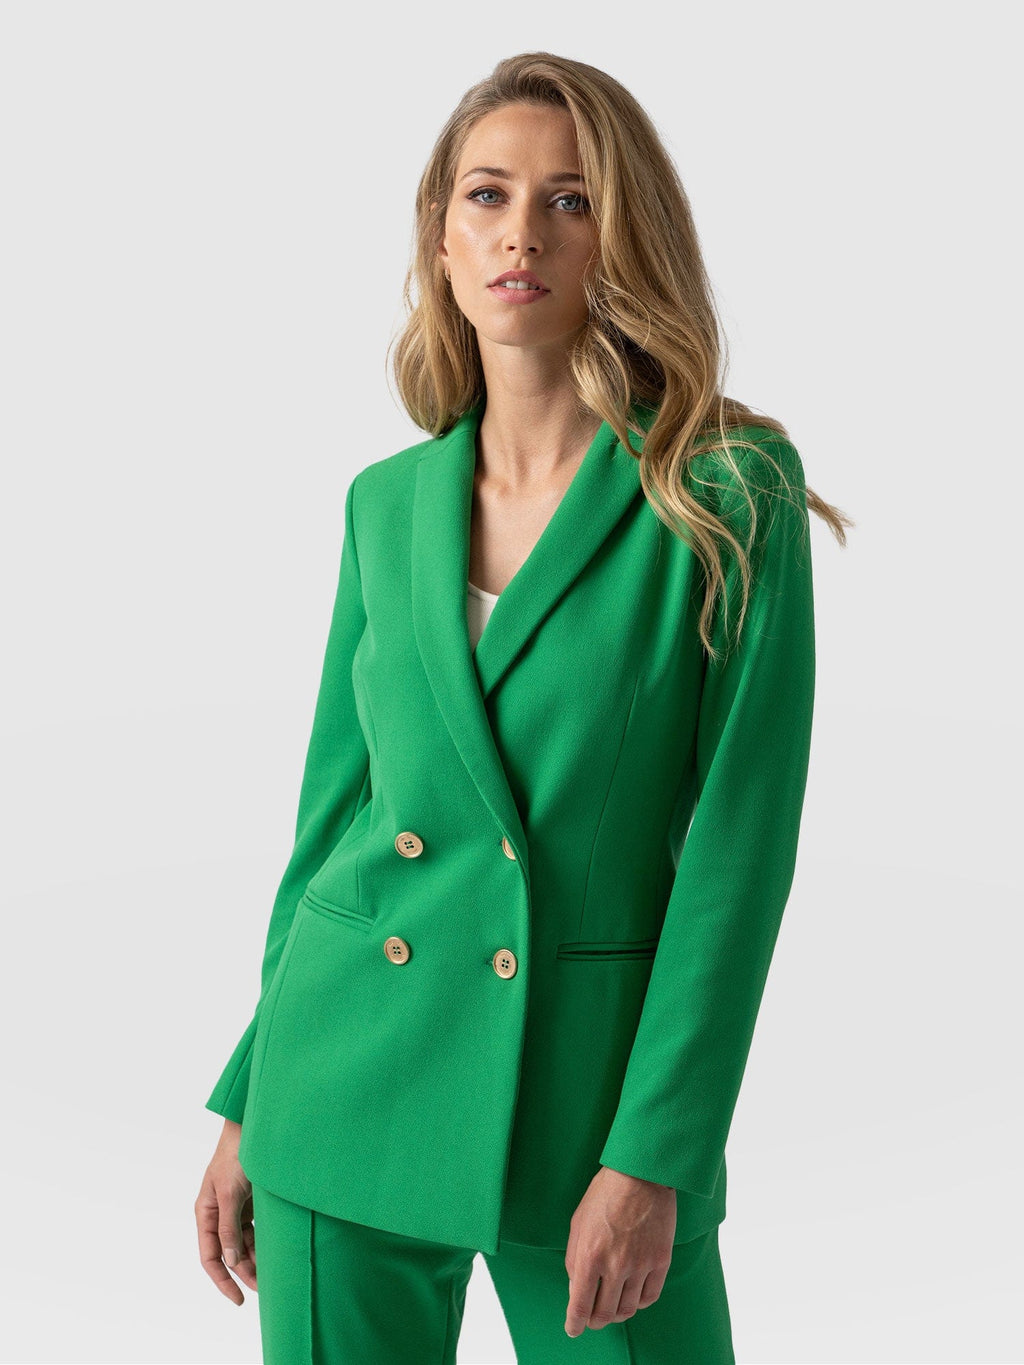 Cambridge Blazer Emerald Green - Women's Blazers